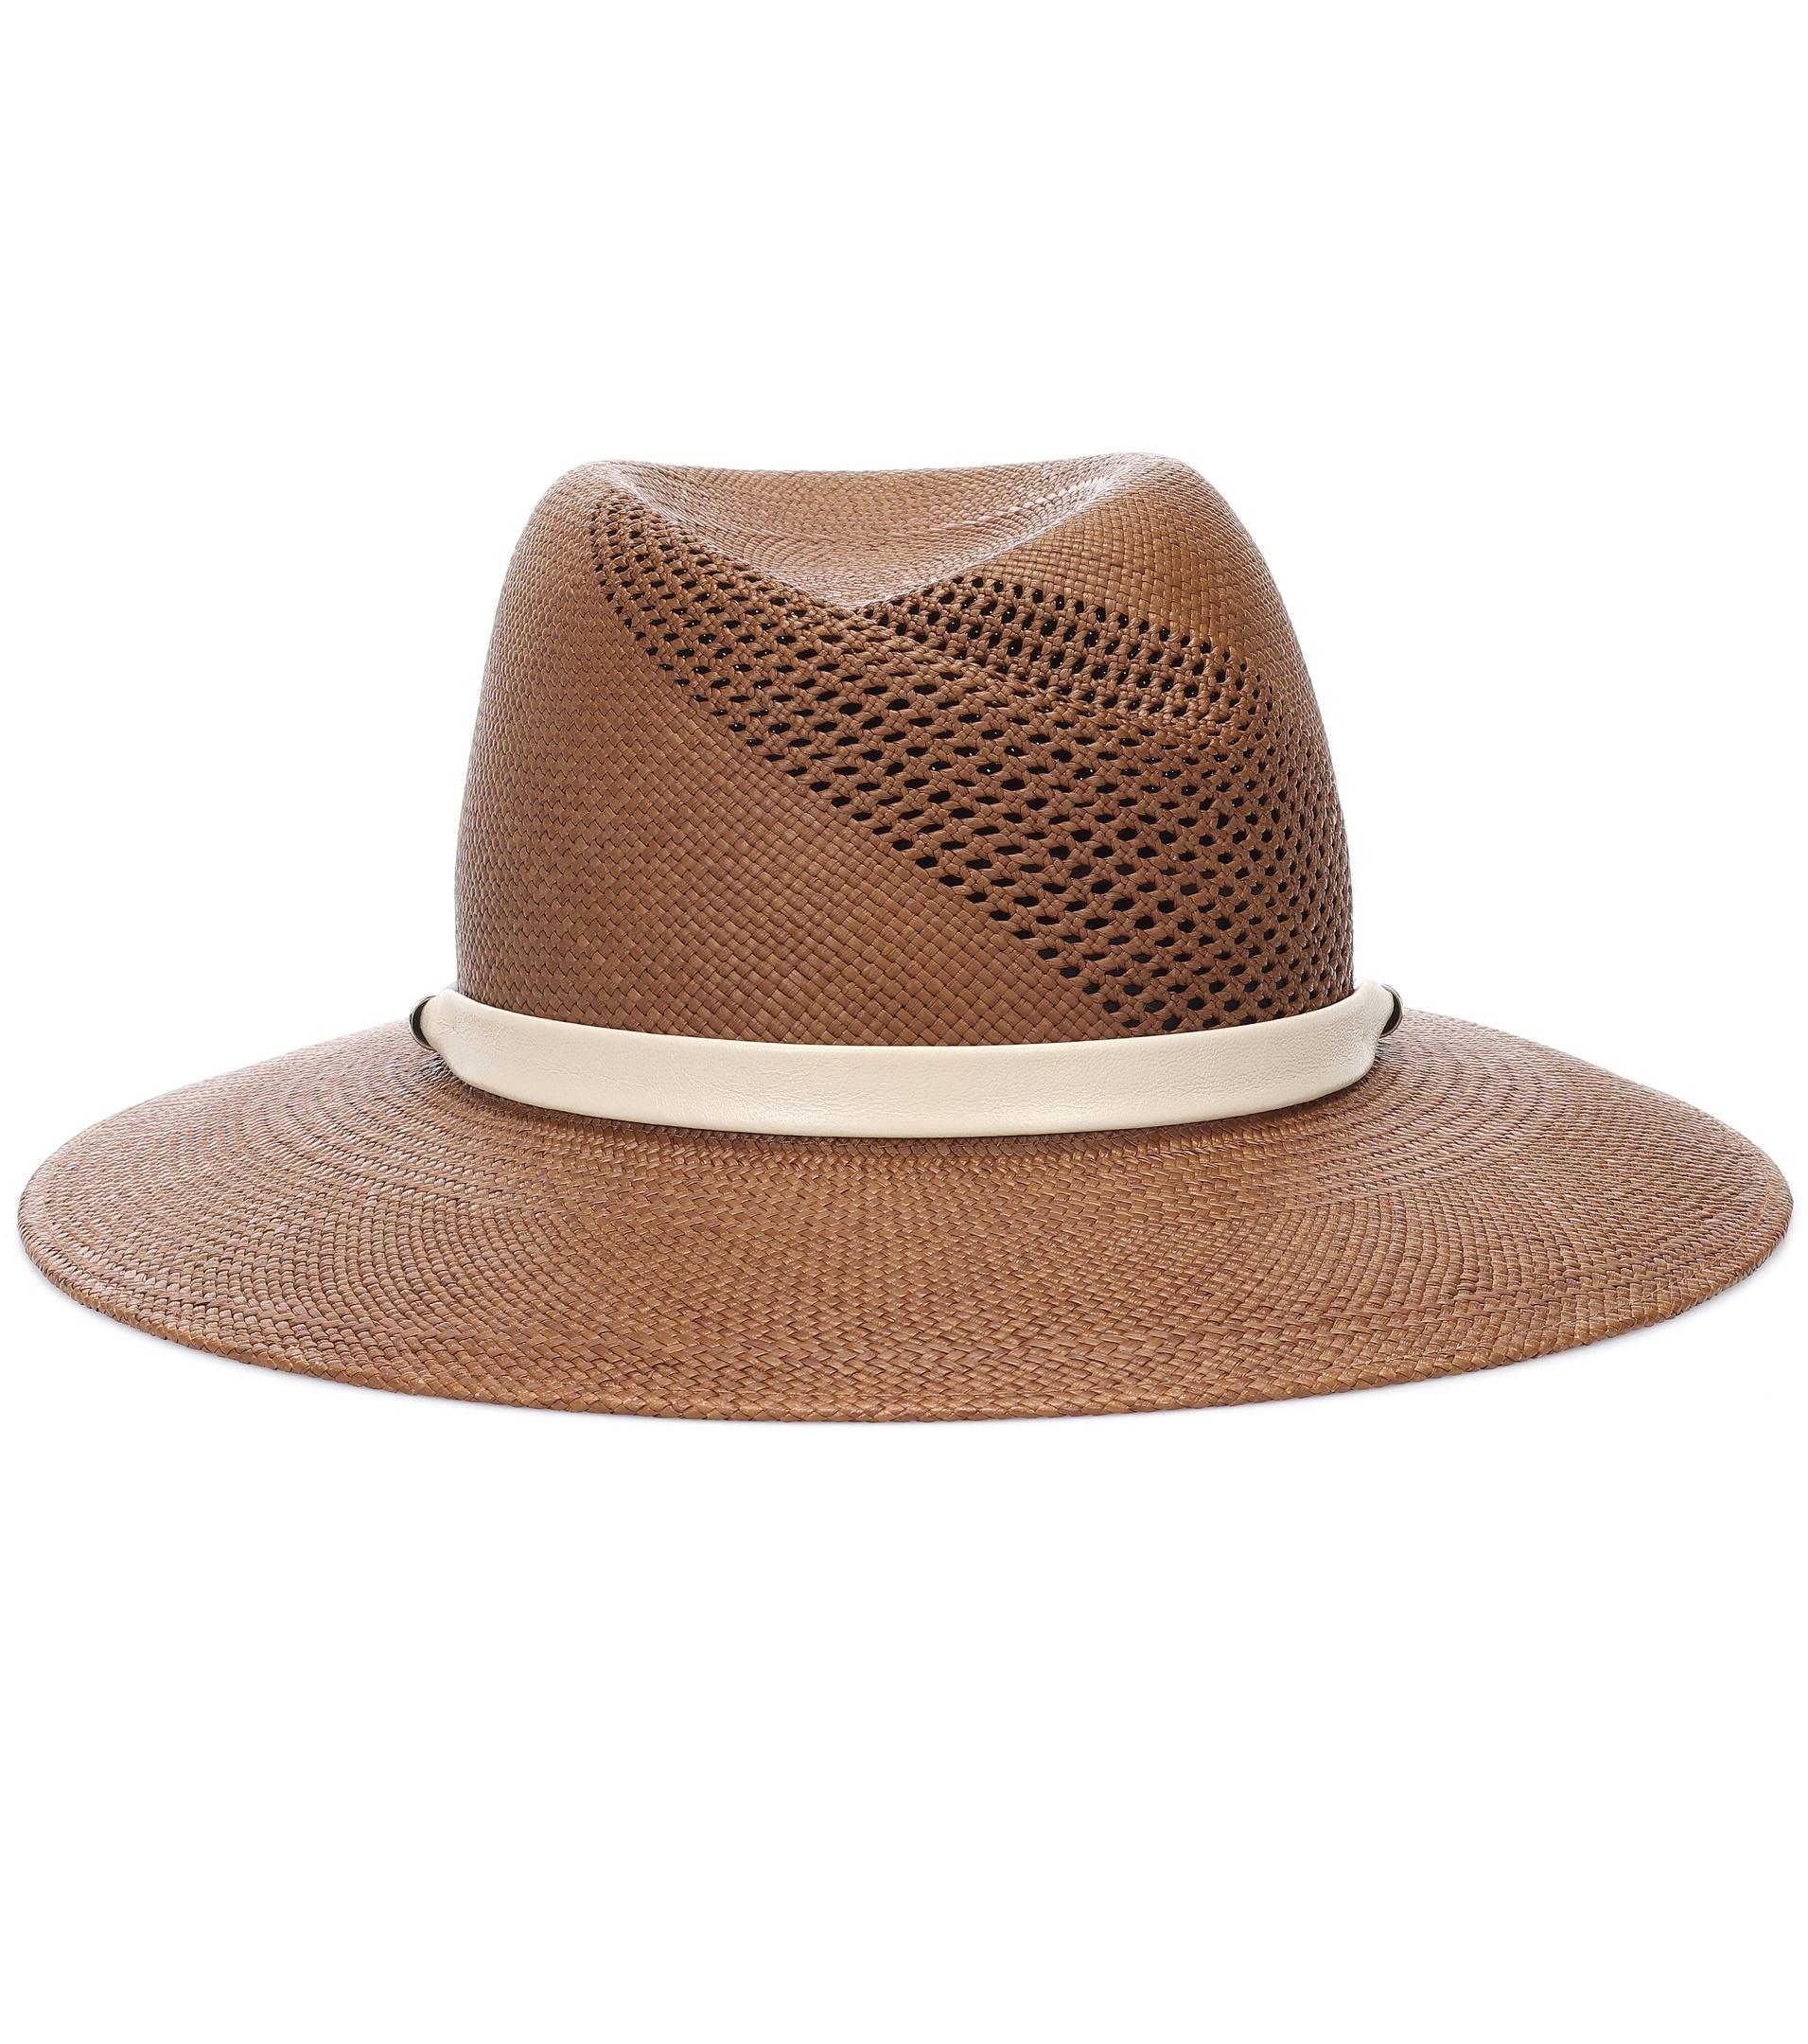 Rag & Bone Zoe Leather-trimmed Straw Hat in Brown - Lyst